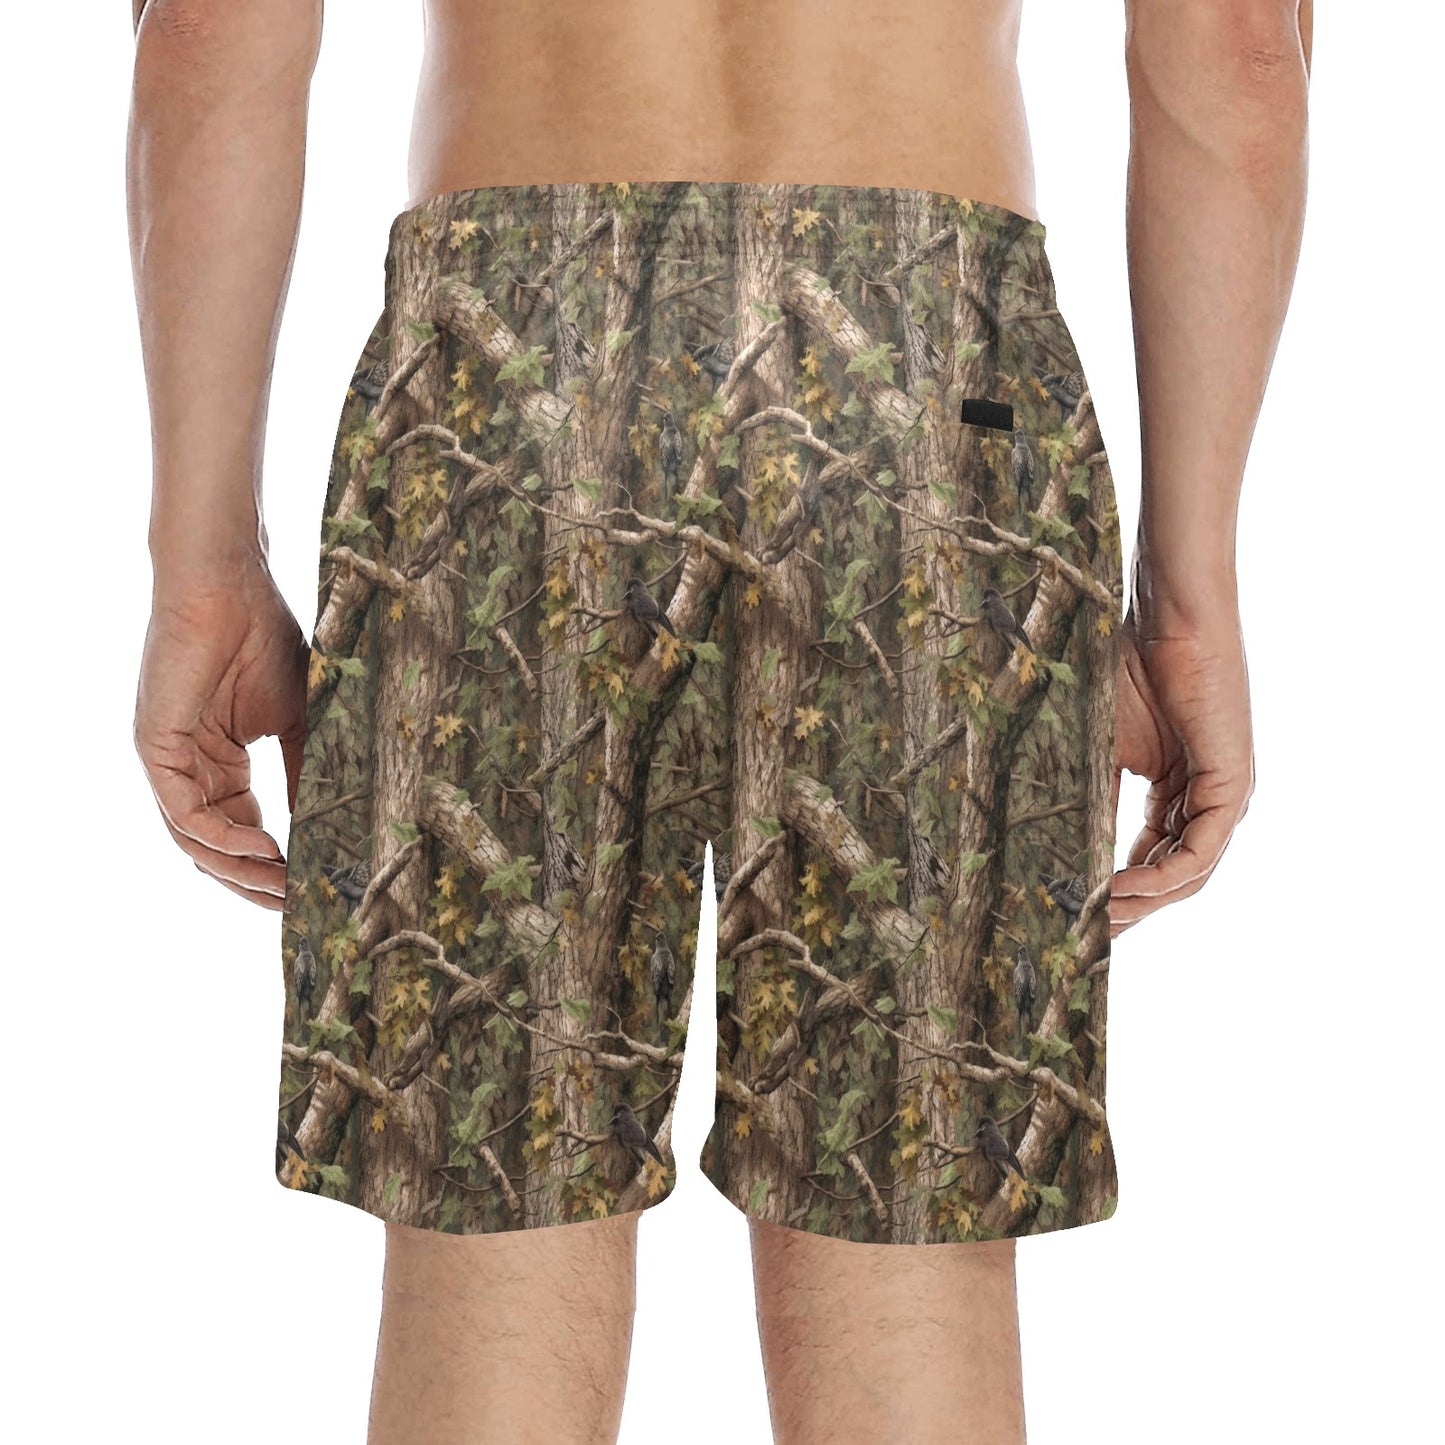 Tree Bark Camo Men Swim Trunks, Real Hunting Mid Length Shorts Green Camouflage Beach Pockets Mesh Lining Drawstring Bathing Suit Plus Size Starcove Fashion